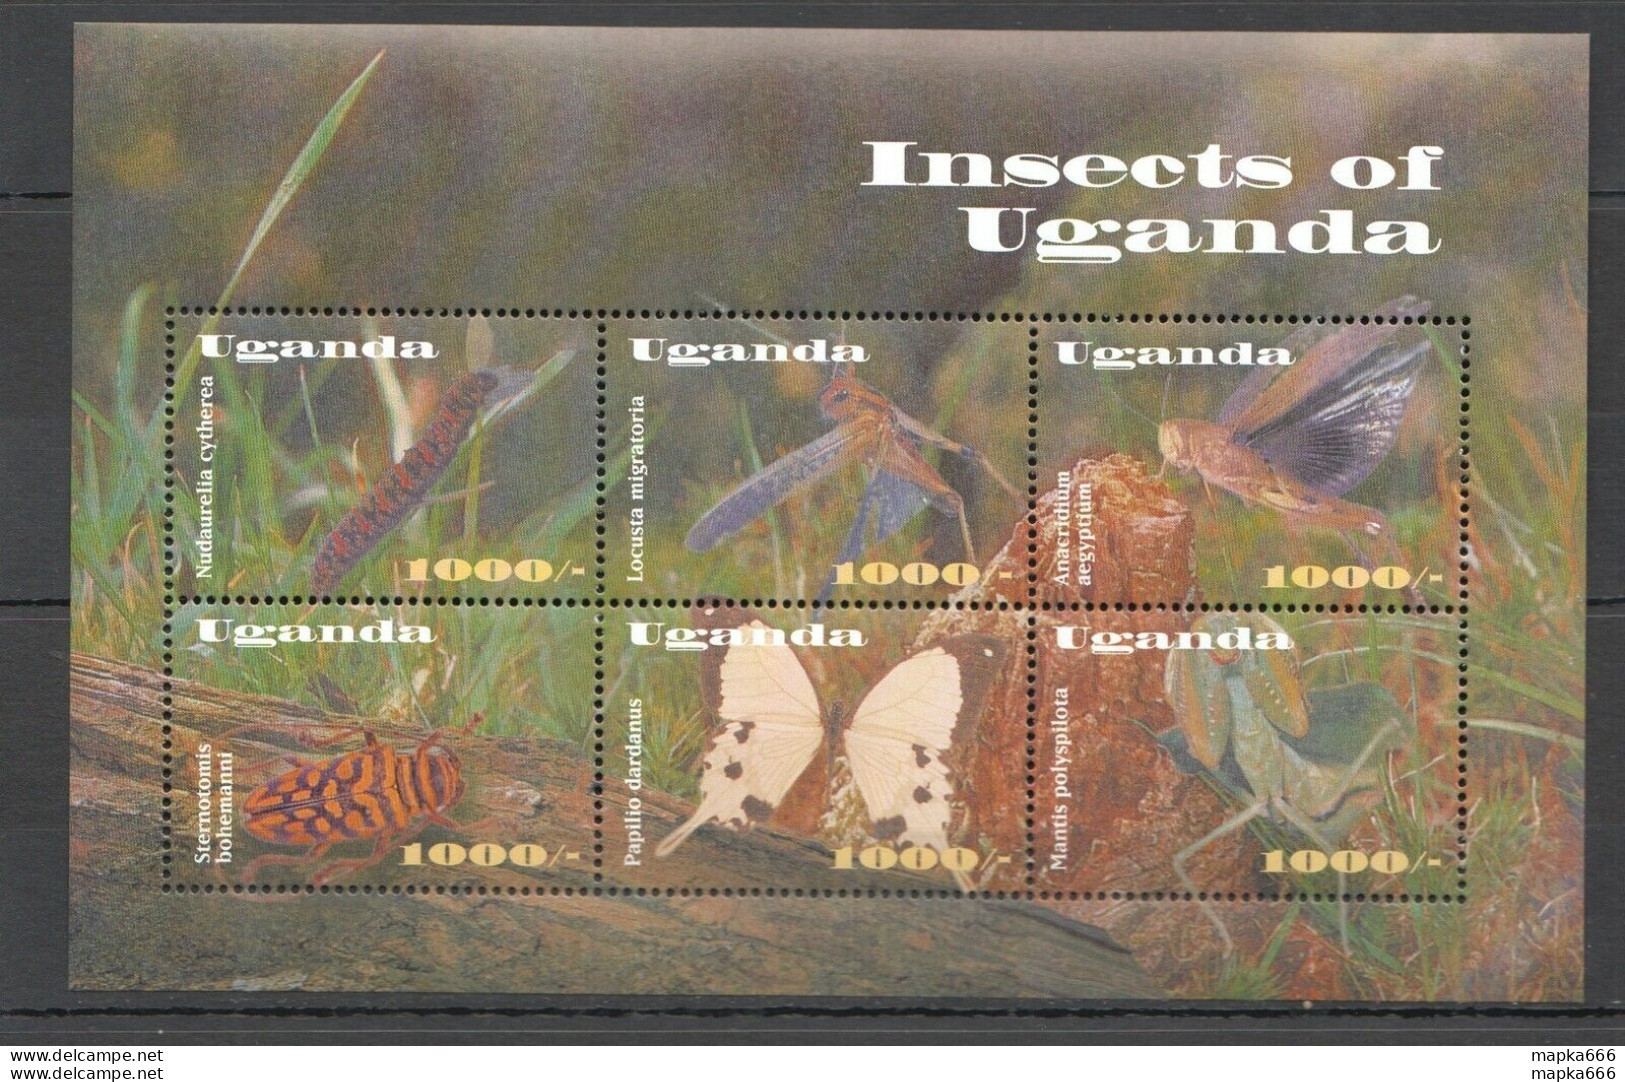 Pk301 Uganda Flora & Fauna Butterflies Insects Of Uganda Kb Mnh Stamps - Butterflies